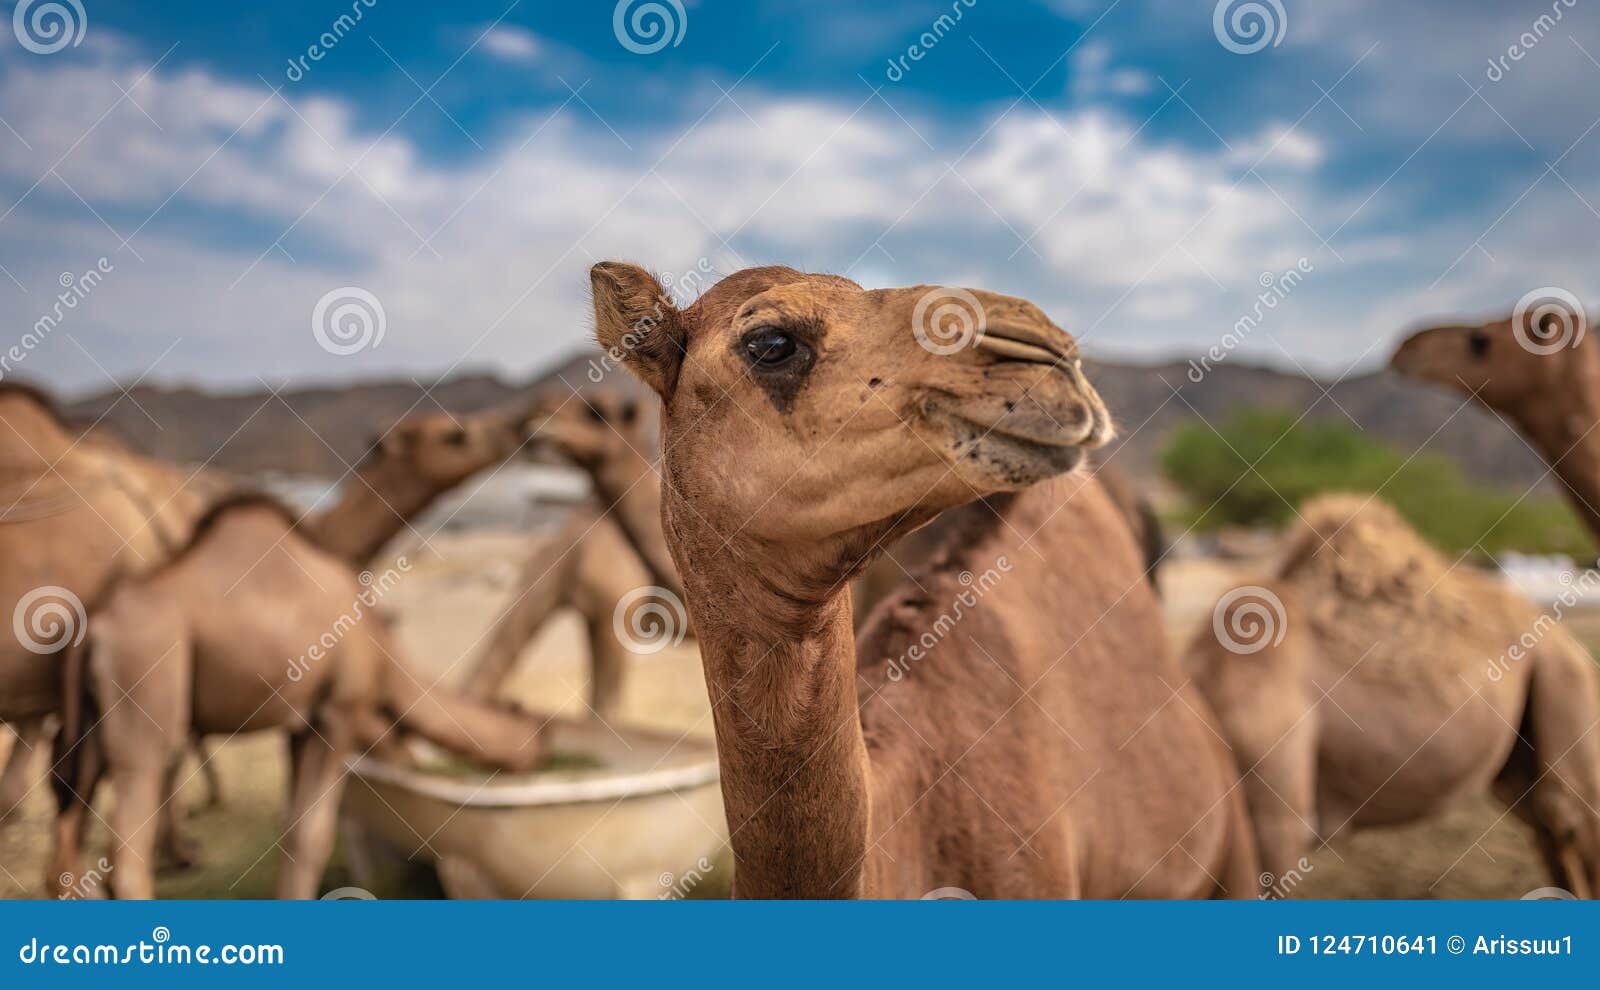 Camel Lives In The Desert Stock Image Image Of Mammal 124710641